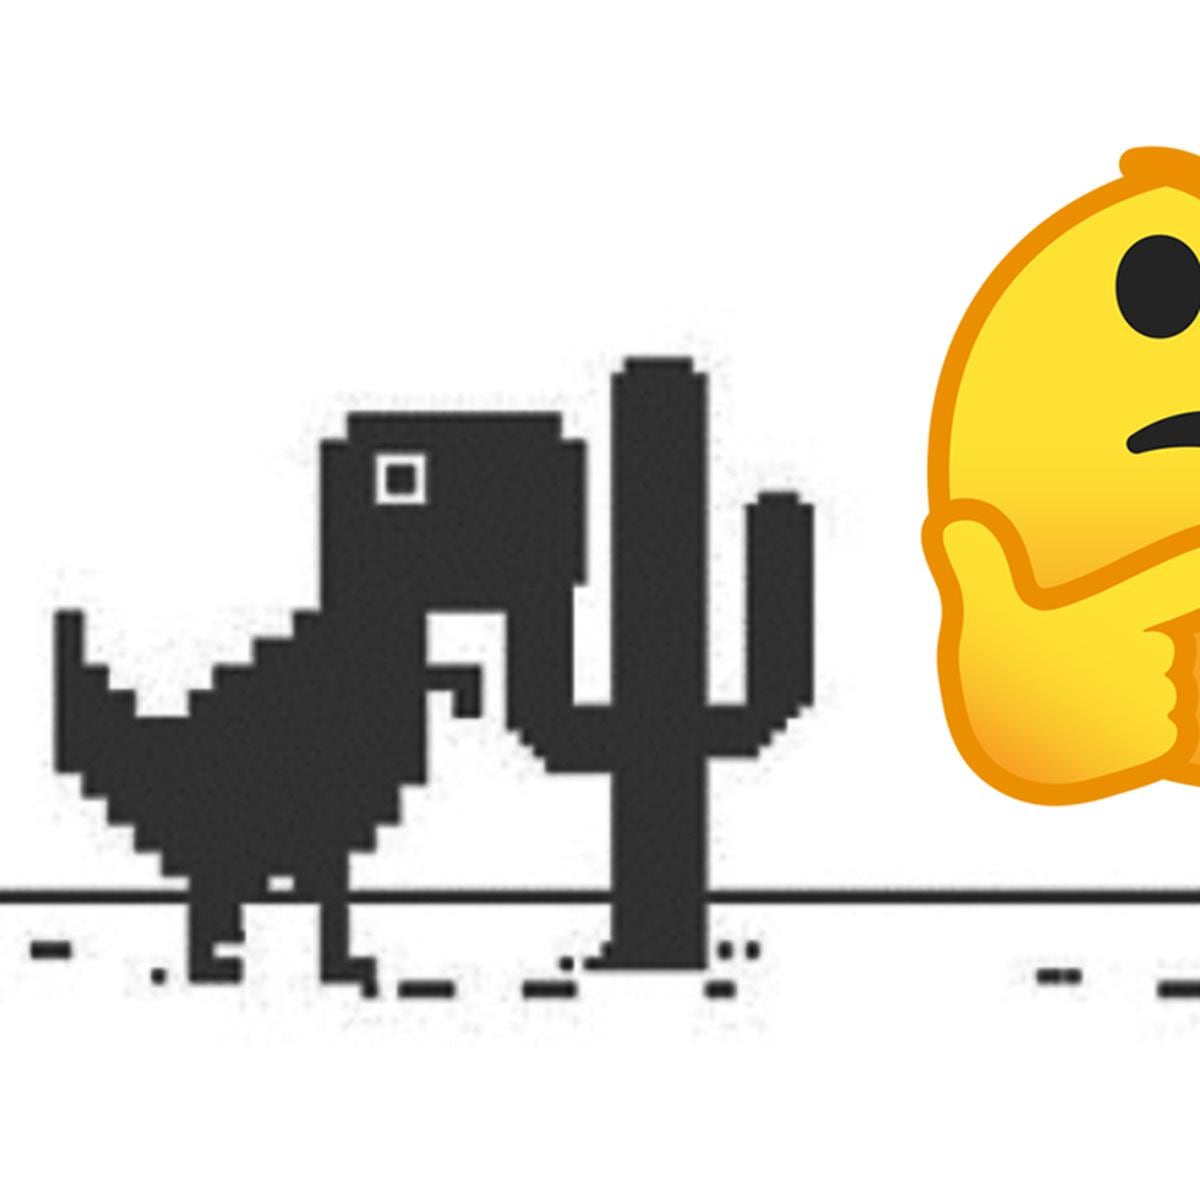 Google Chrome | Cómo termina el juego del dinosaurio T-Rex | Internet |  Games | Navegador | Offline | PC | Computadora | Smartphone | Celulares |  Aplicaciones | Apps | Video |